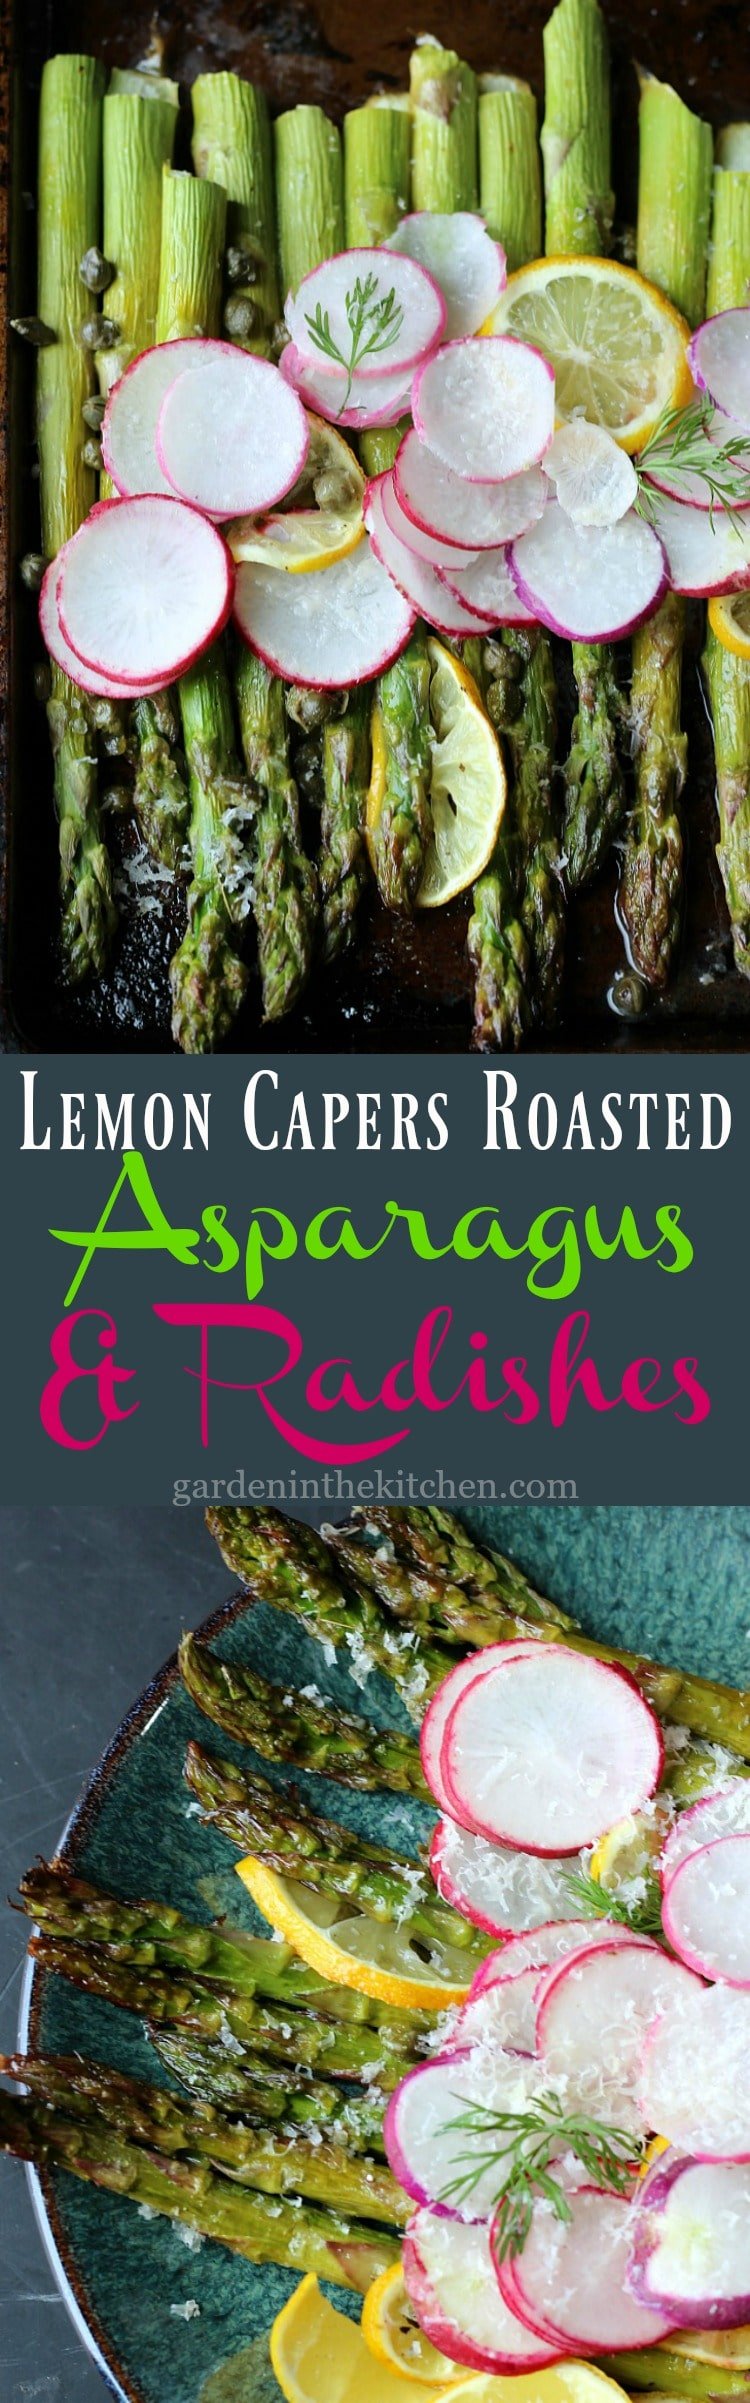 Lemon Capers Roasted Asparagus & Radishes 